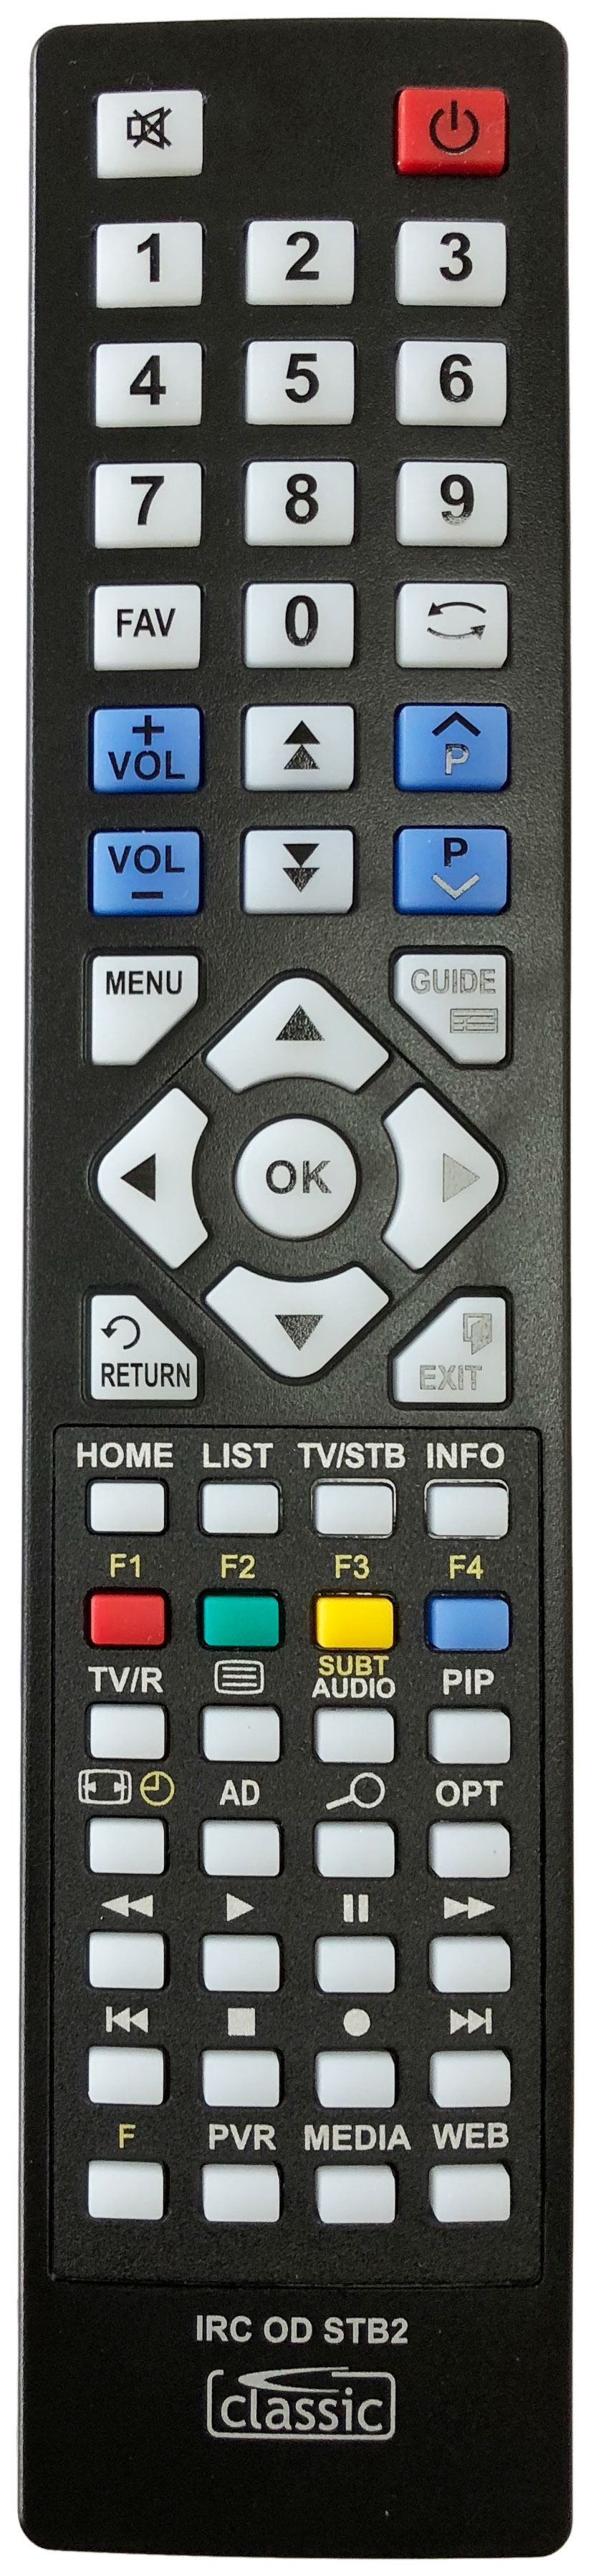 SAMSUNG GL59-00160B Remote Control Alternative 